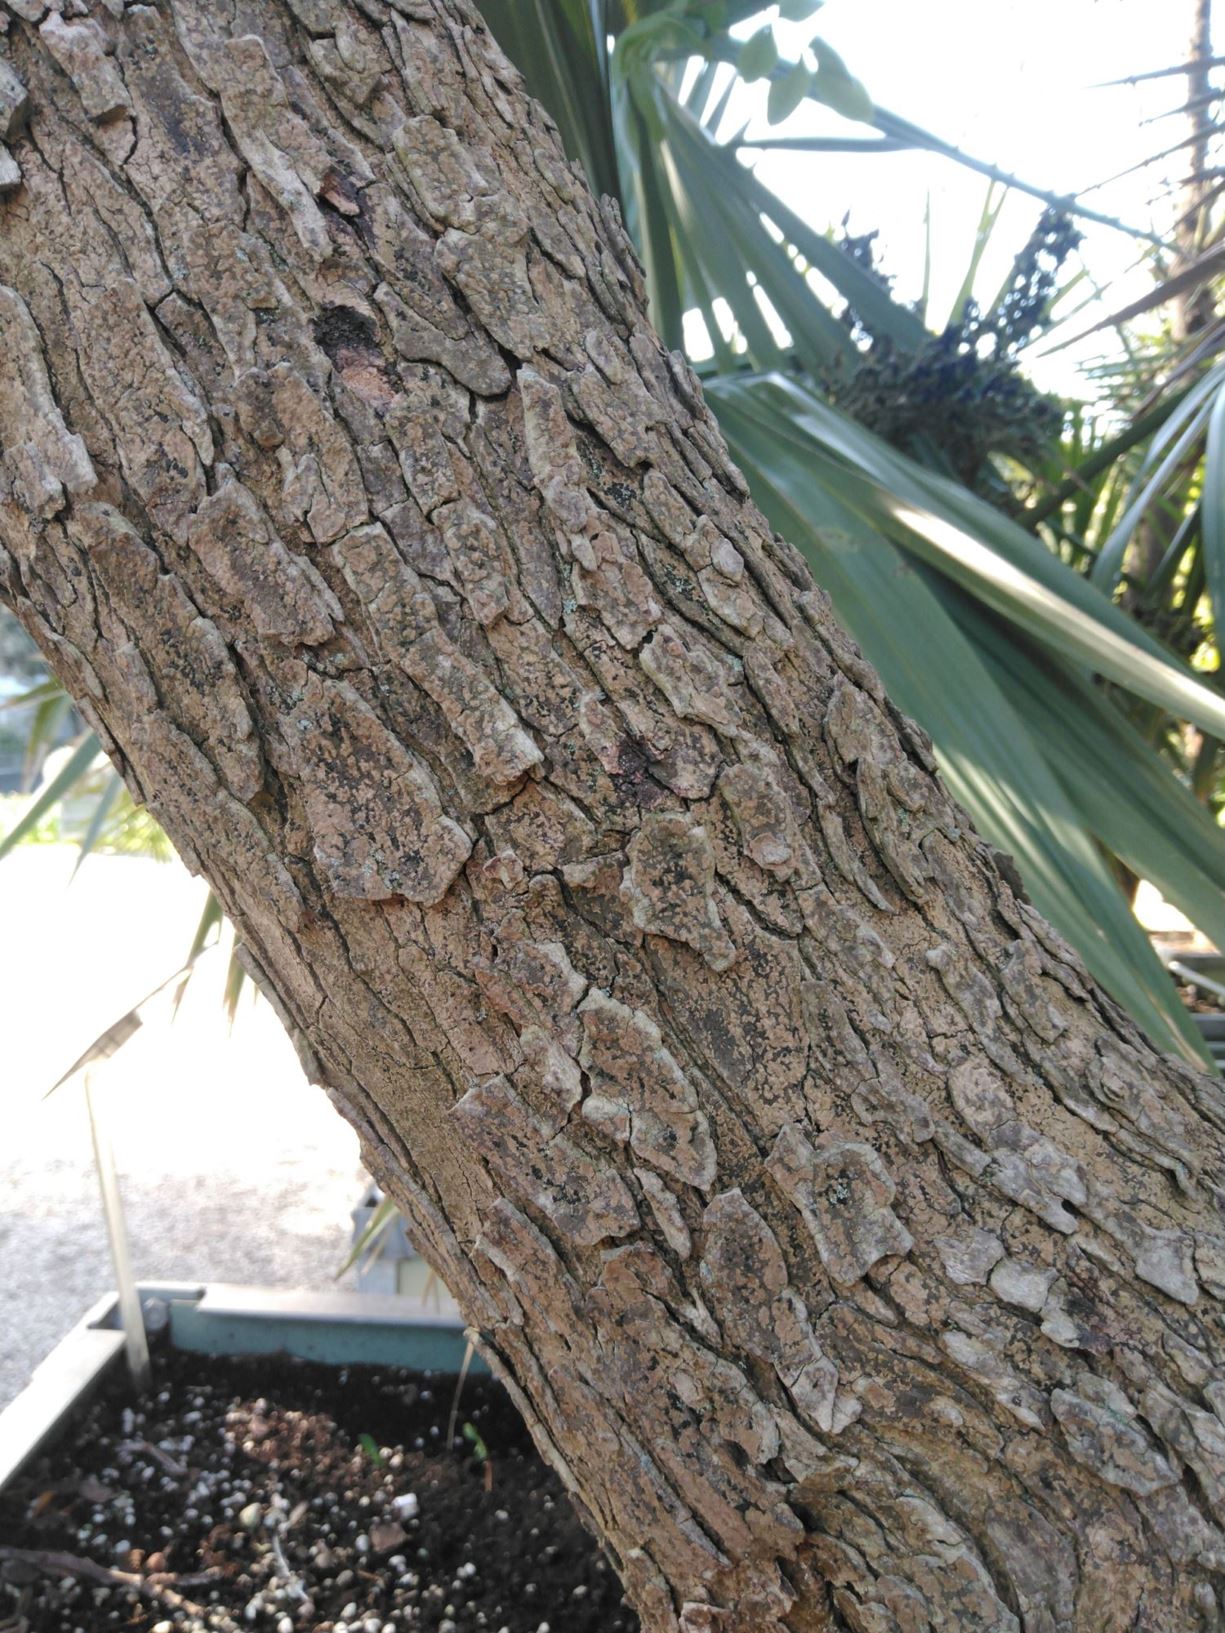 Pistacia terebinthus - Terpentijnboom, terebinth, China turpentine tree